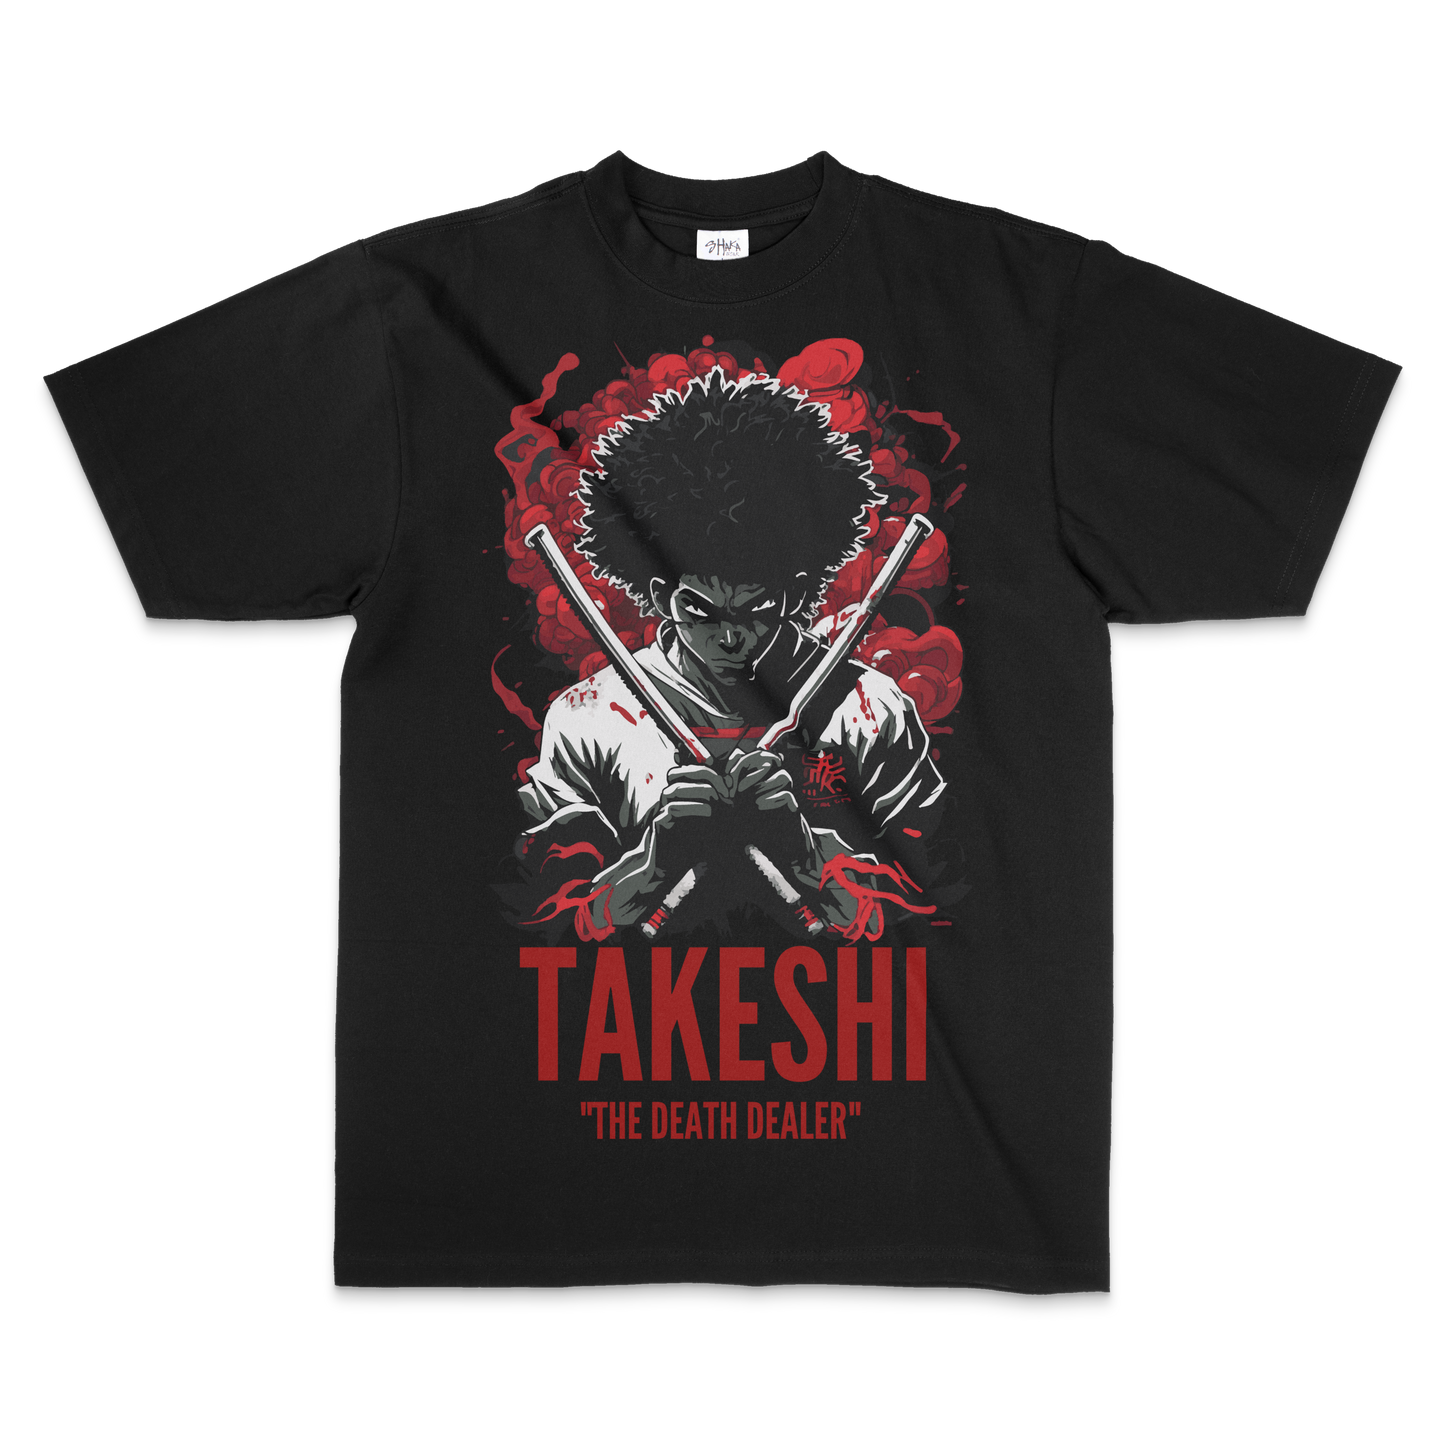 Takeshi "The Death Dealer"